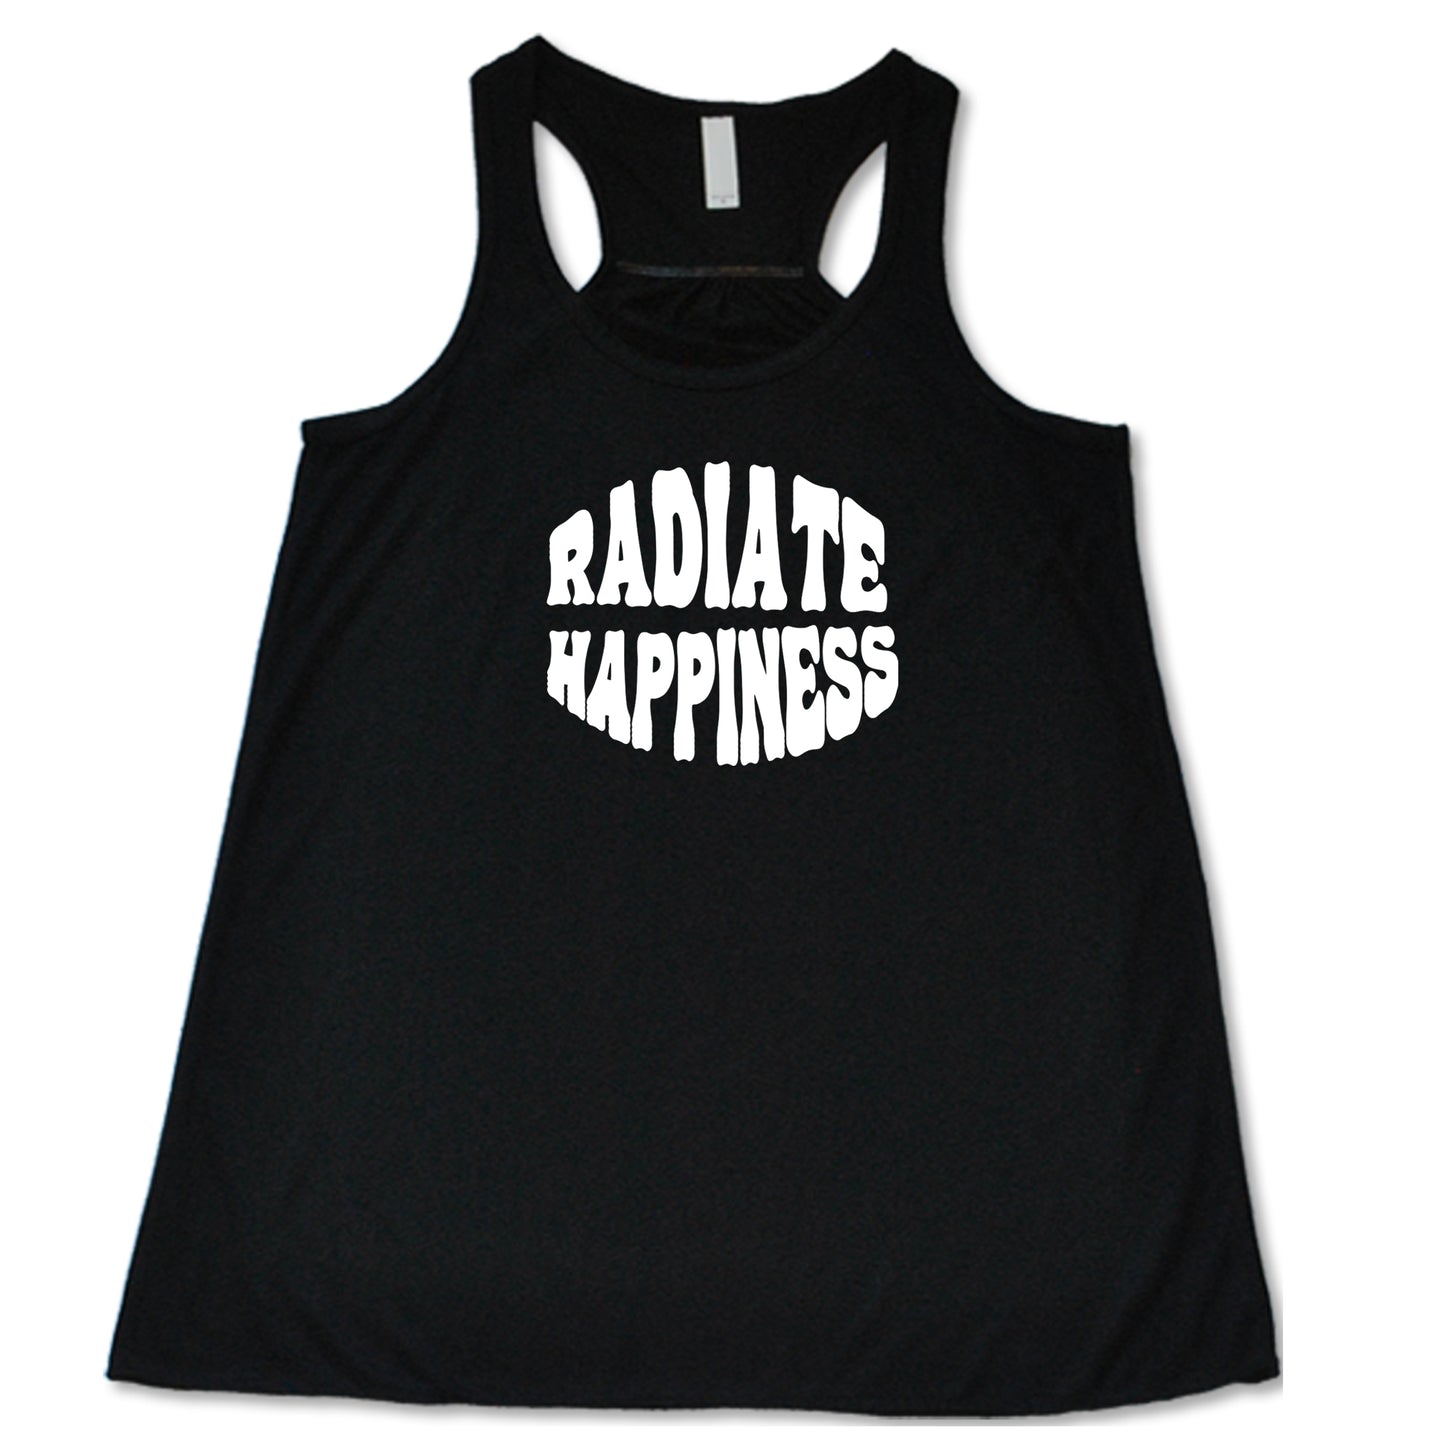 radiate happiness black racerback shirt